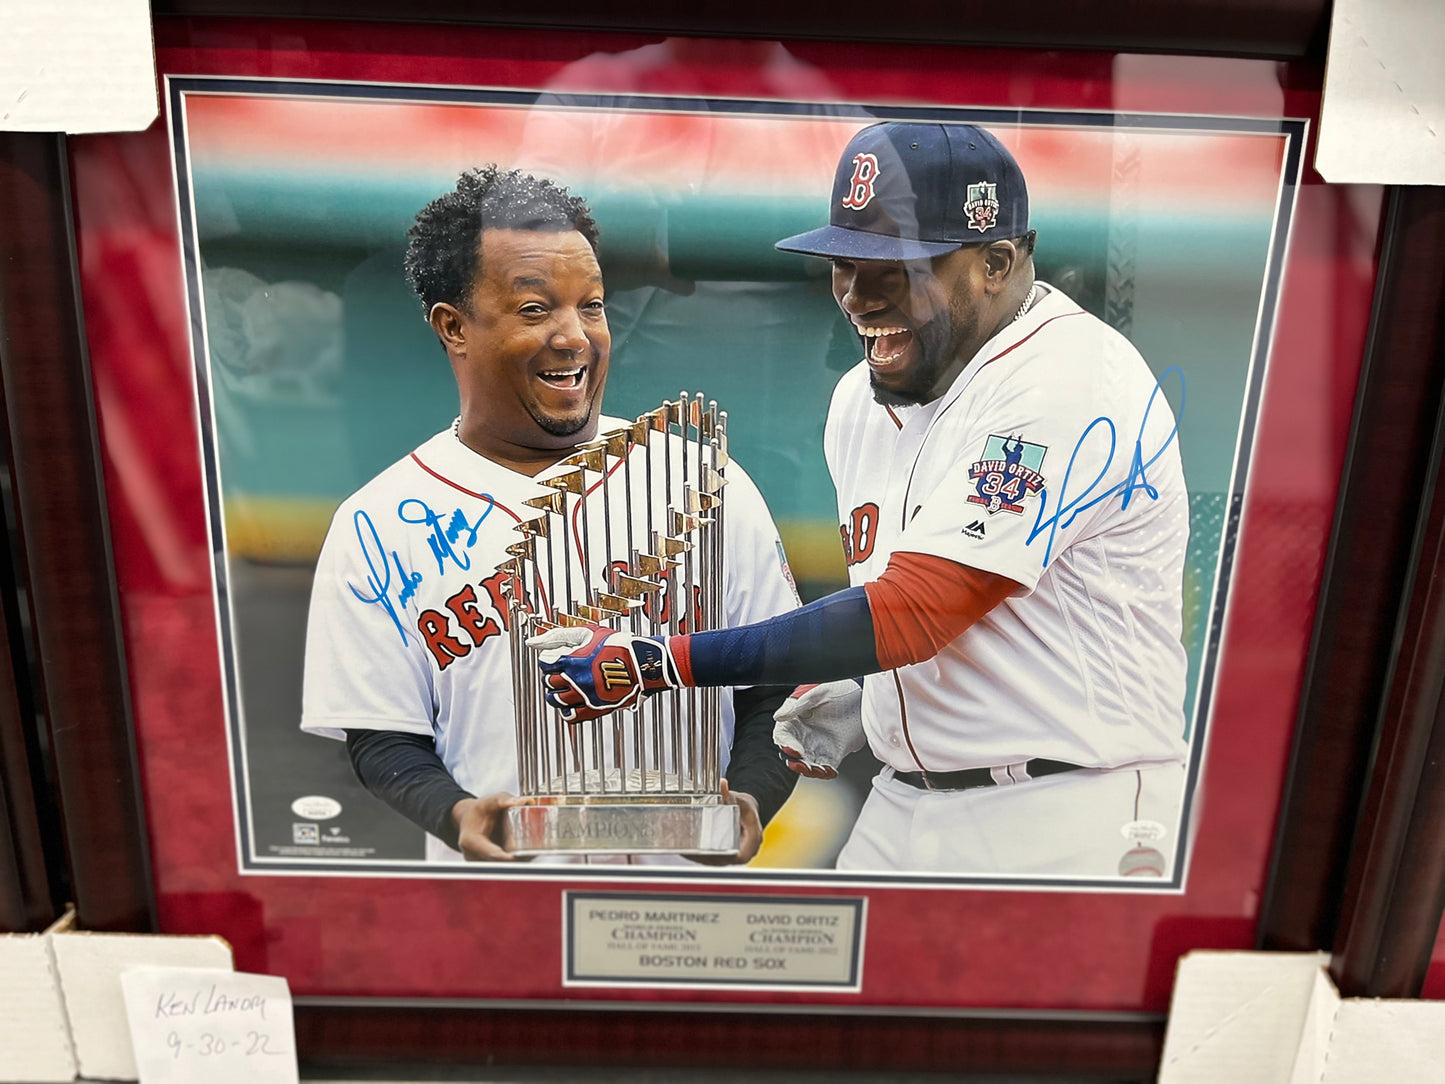 Red Sox Legends Pedro Martinez & David Ortiz signed and framed 16x20